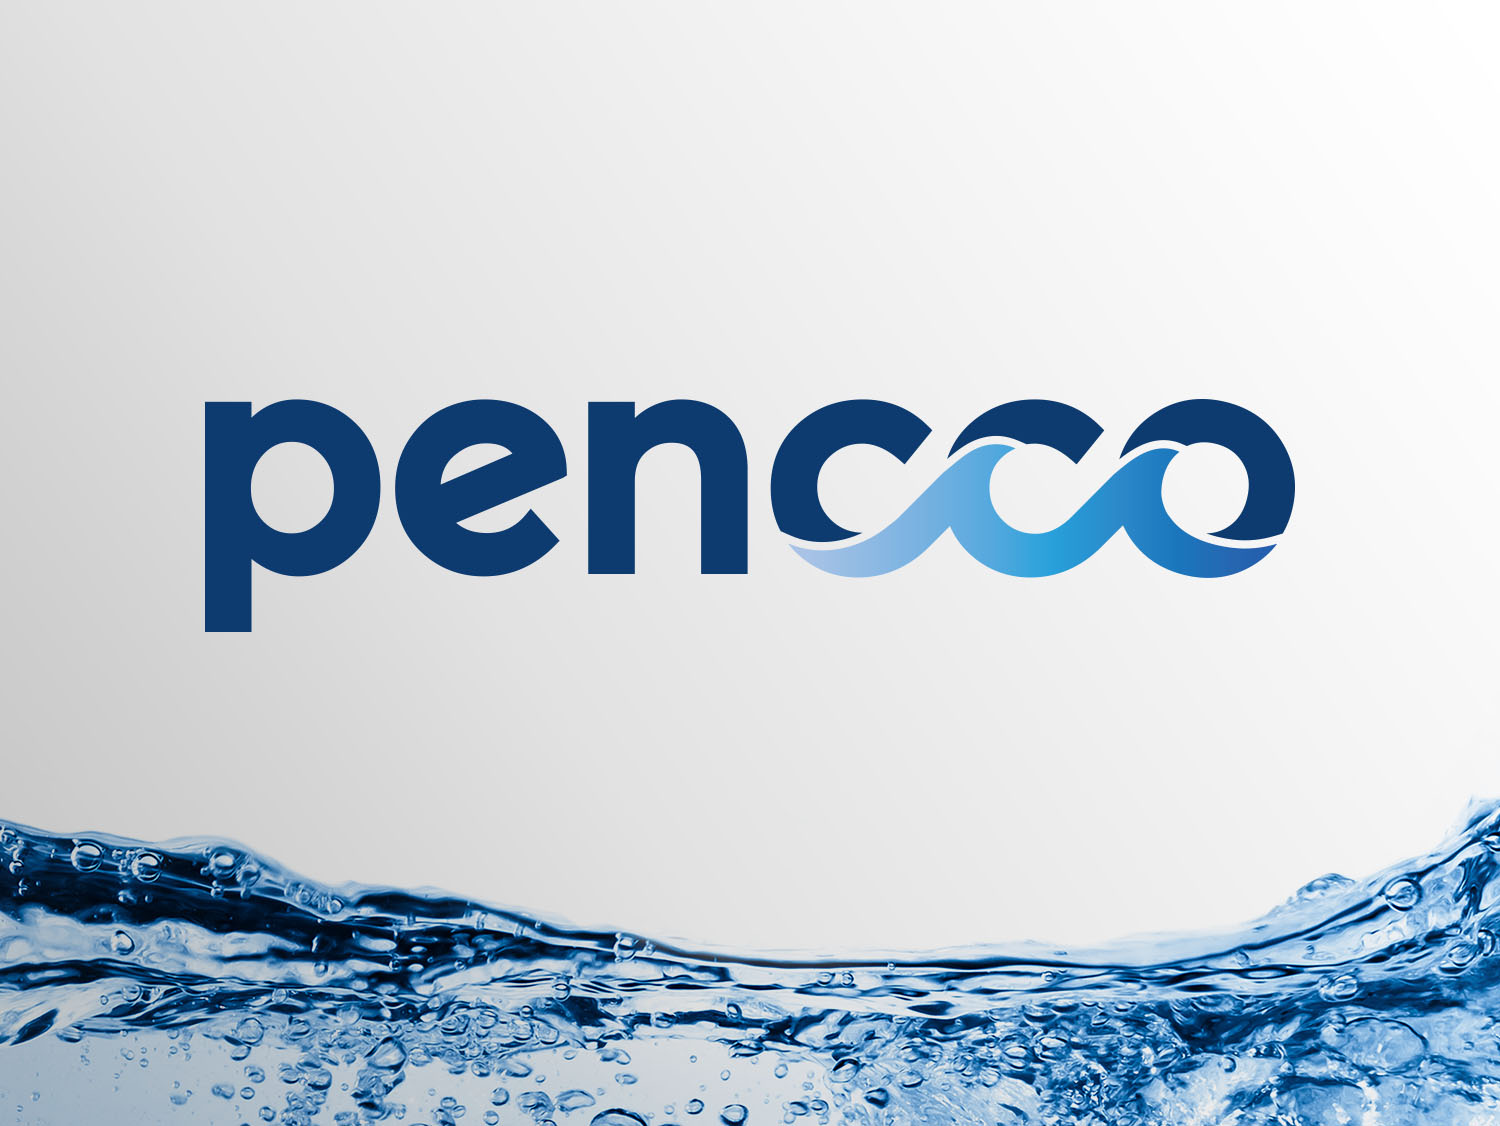 Pencco Inc.